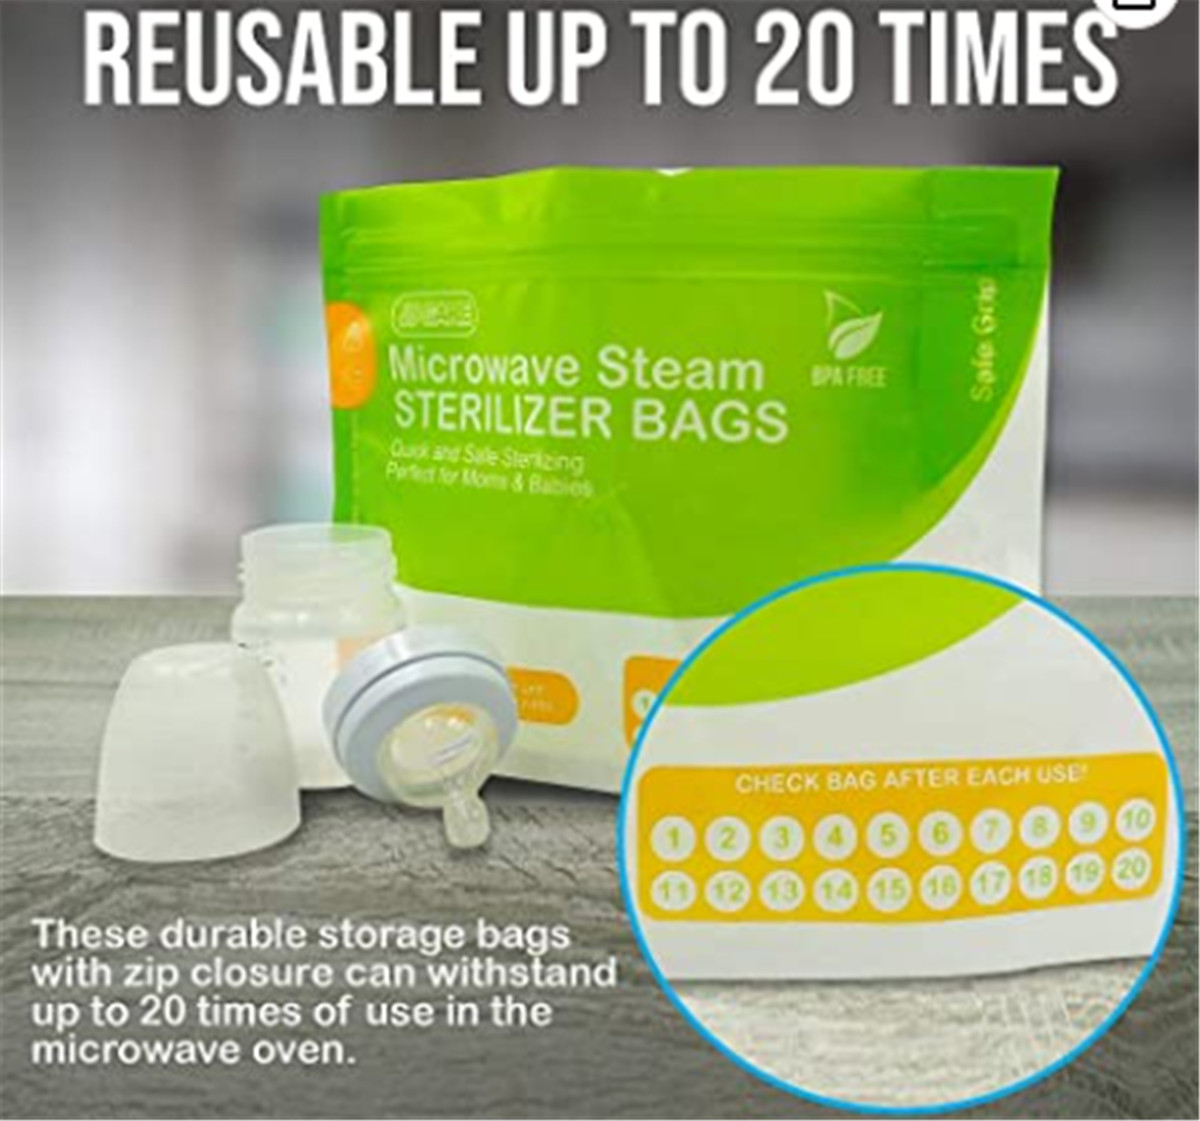 Custom Microwave Bottle Sterilizer Bags Sterilizer Bags for Baby